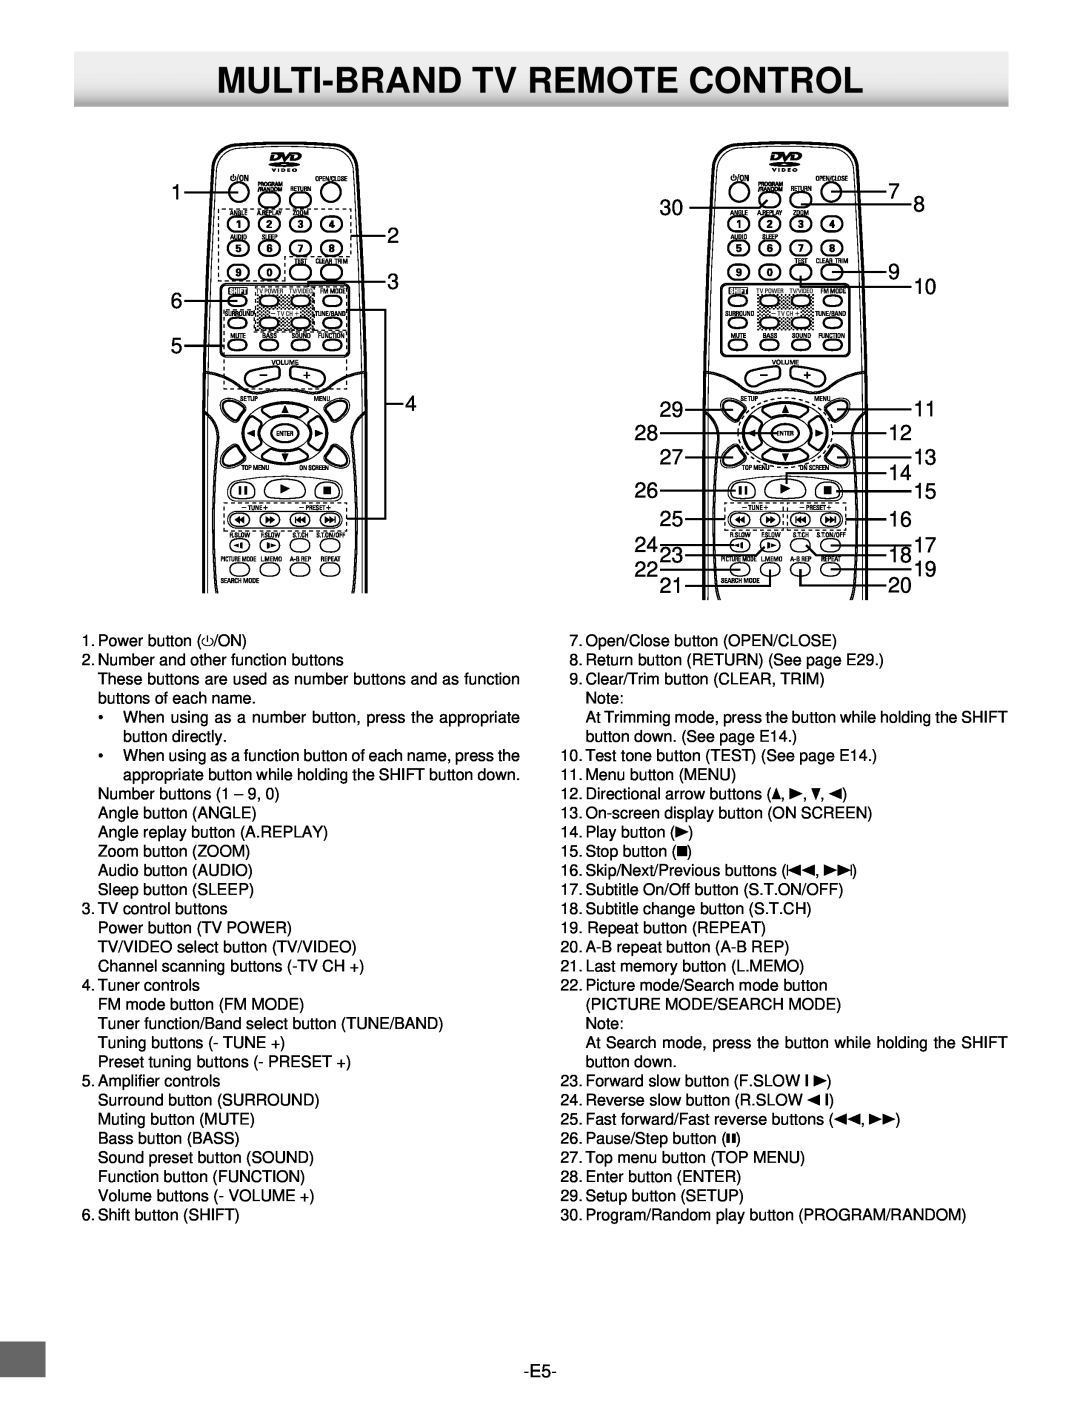 Sanyo DWM-2500 instruction manual Multi-Brandtv Remote Control 